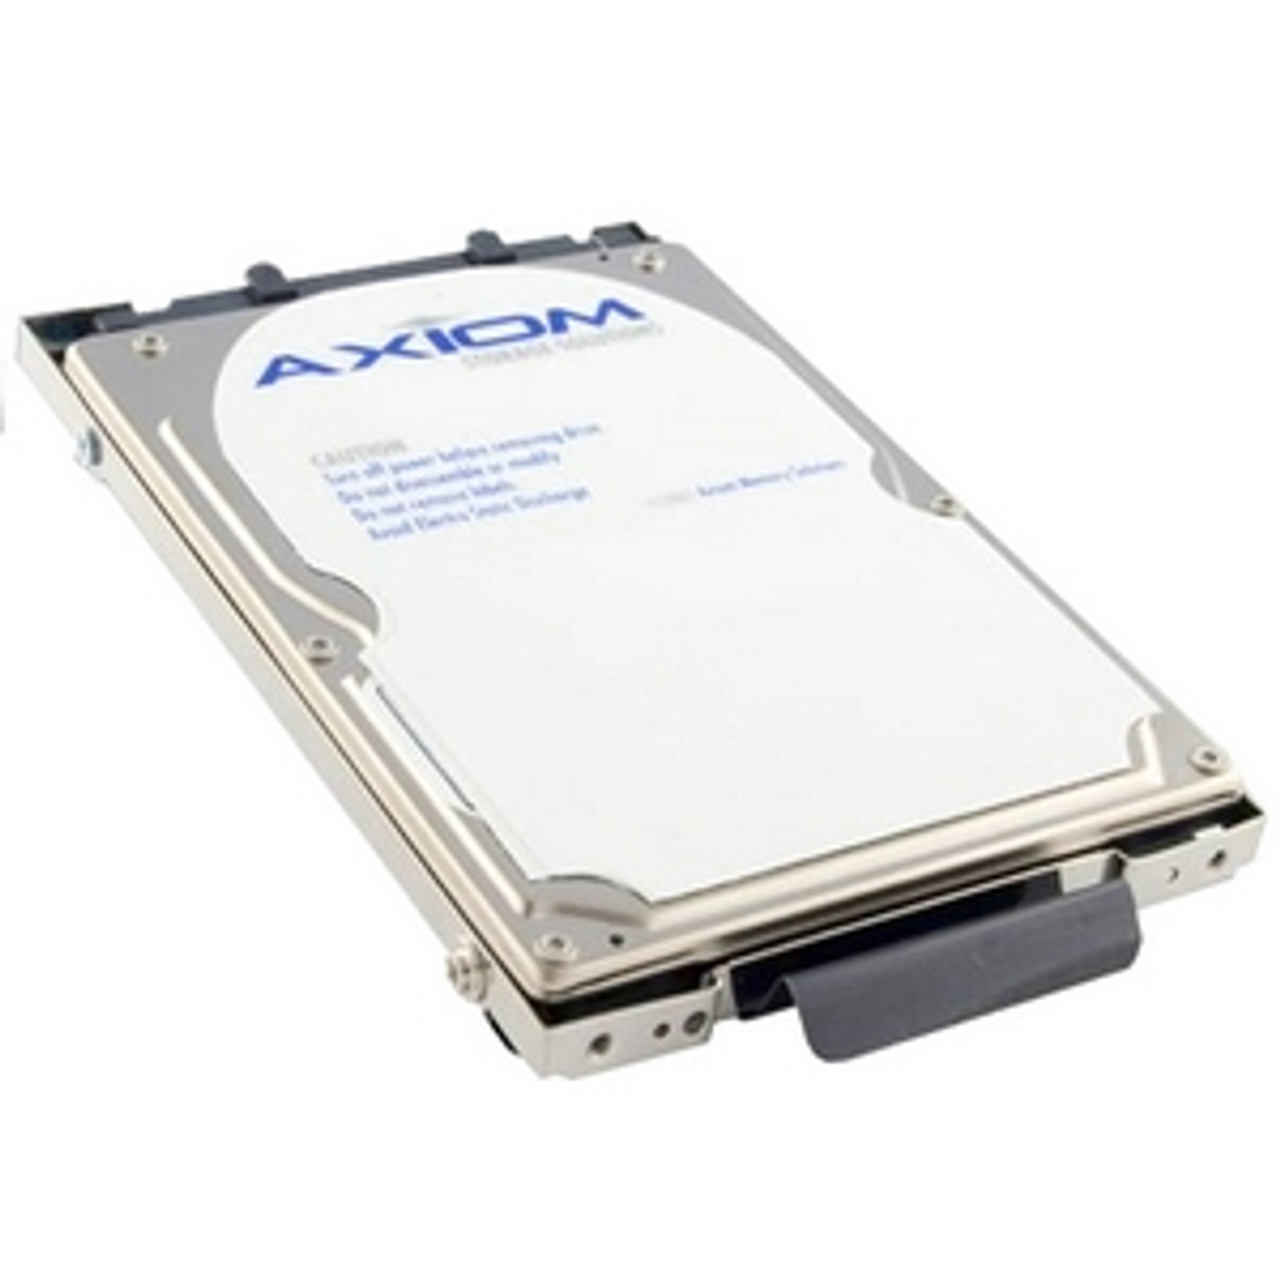 AXD-1740 - Axiom 40 GB 2.5 Plug-in Module Hard Drive - IDE